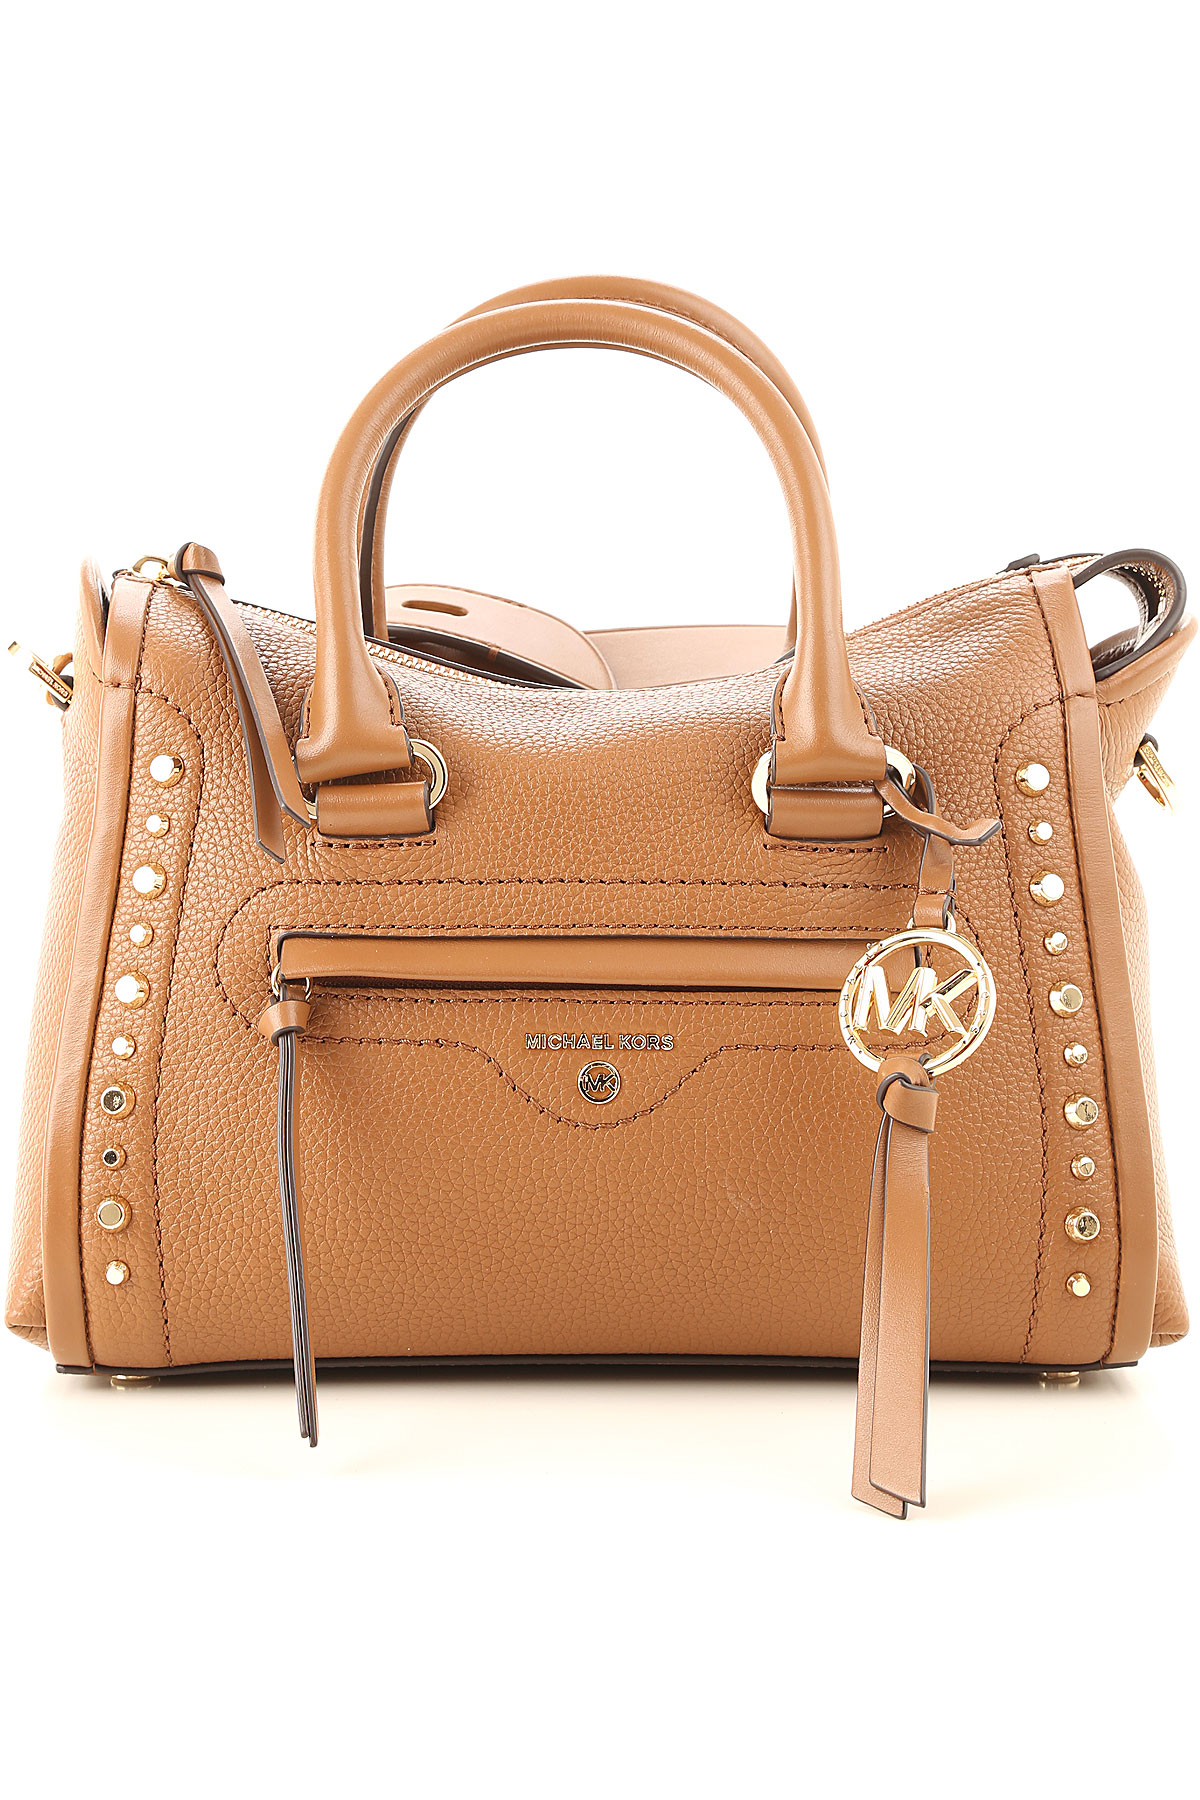 Handbags Michael Kors, Style code: 30s0gccs1t-marrone-